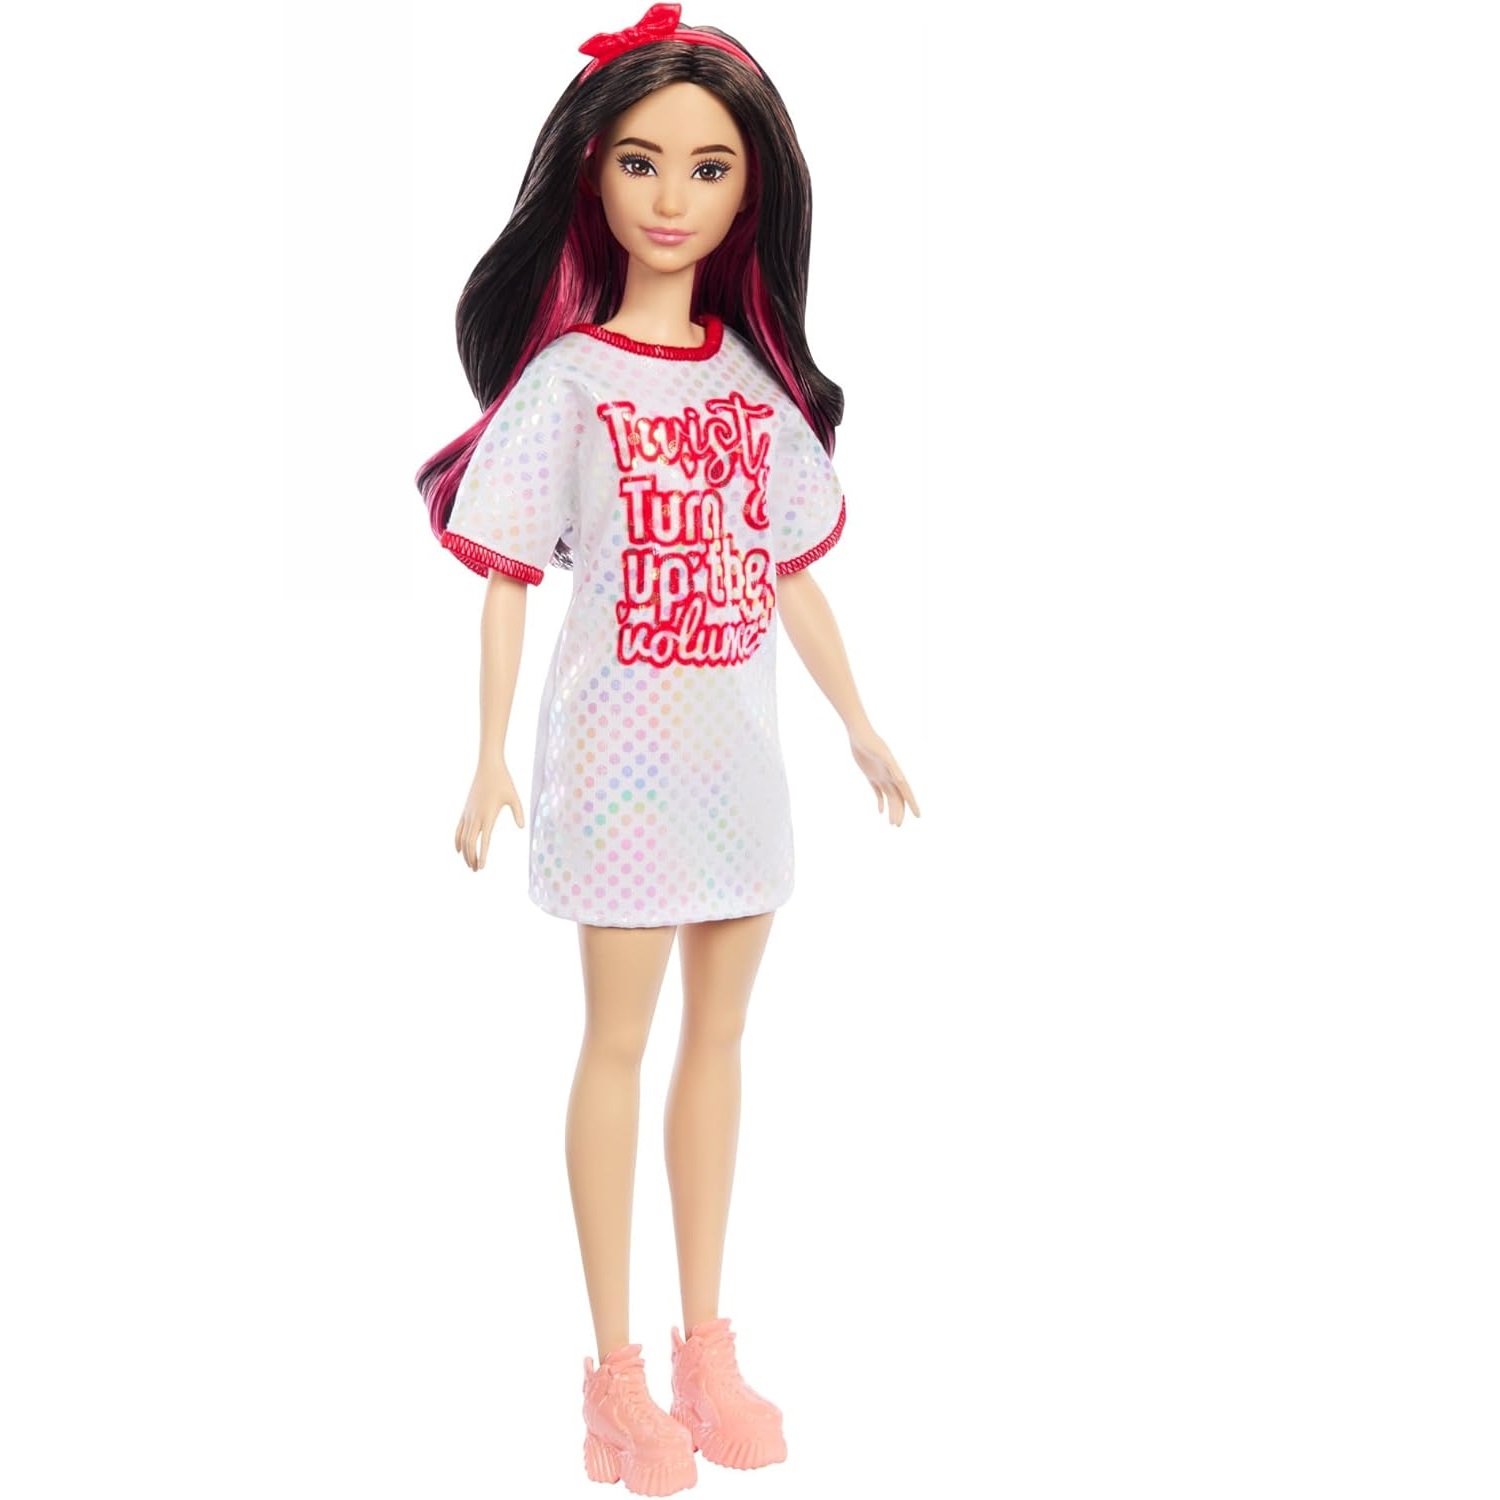 Кукла Barbie HRH12 214 платье Twist 'n Turn